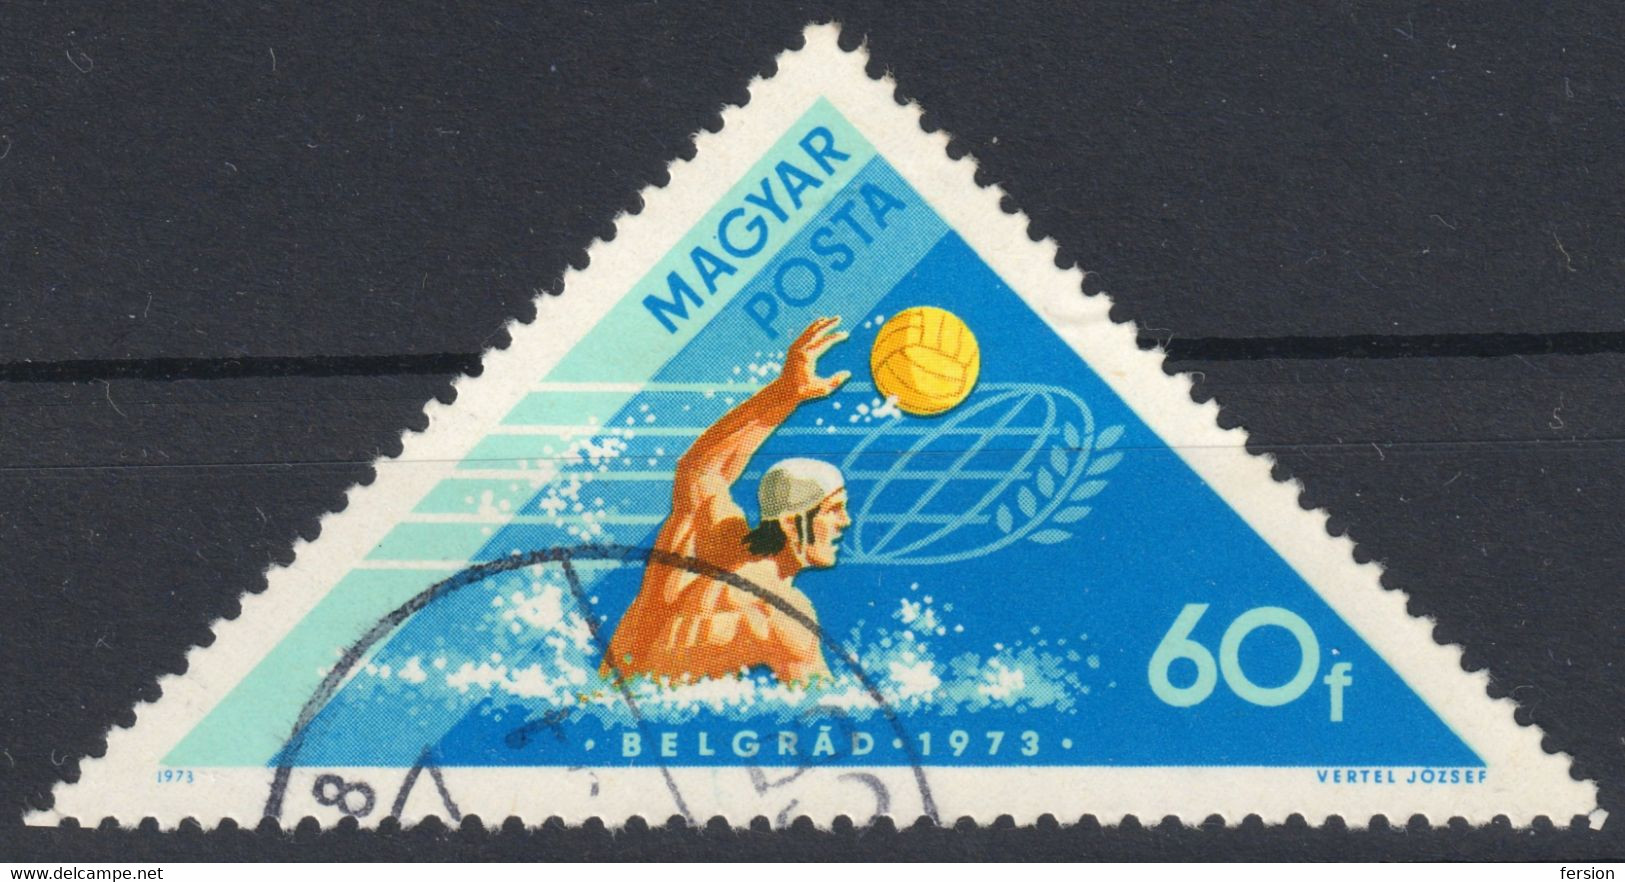 TRIANGLE STAMP Water Polo HUNGARY 1973 World Aquatics Championships Belgrade Yugoslavia - Water Polo